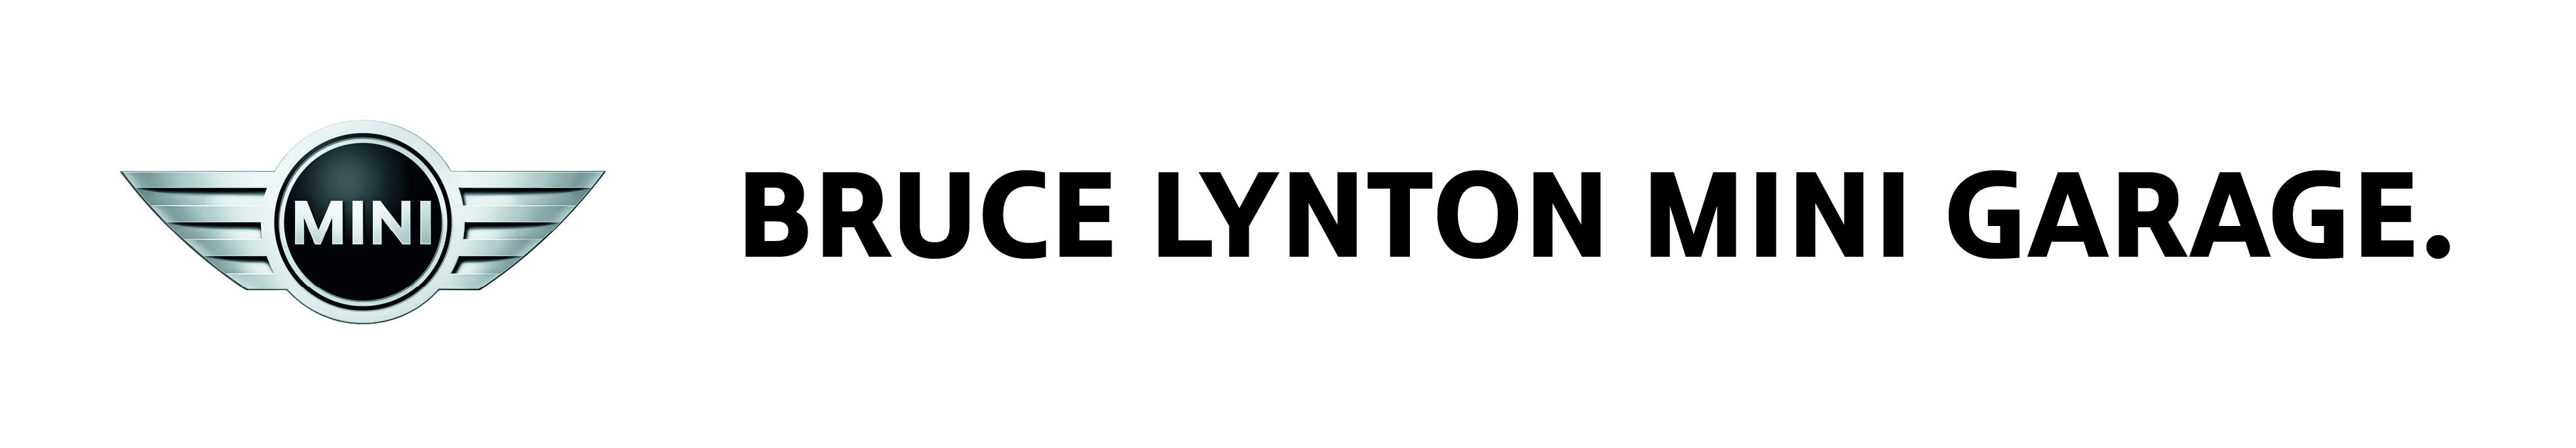 Bruce Lynton MINI Garage